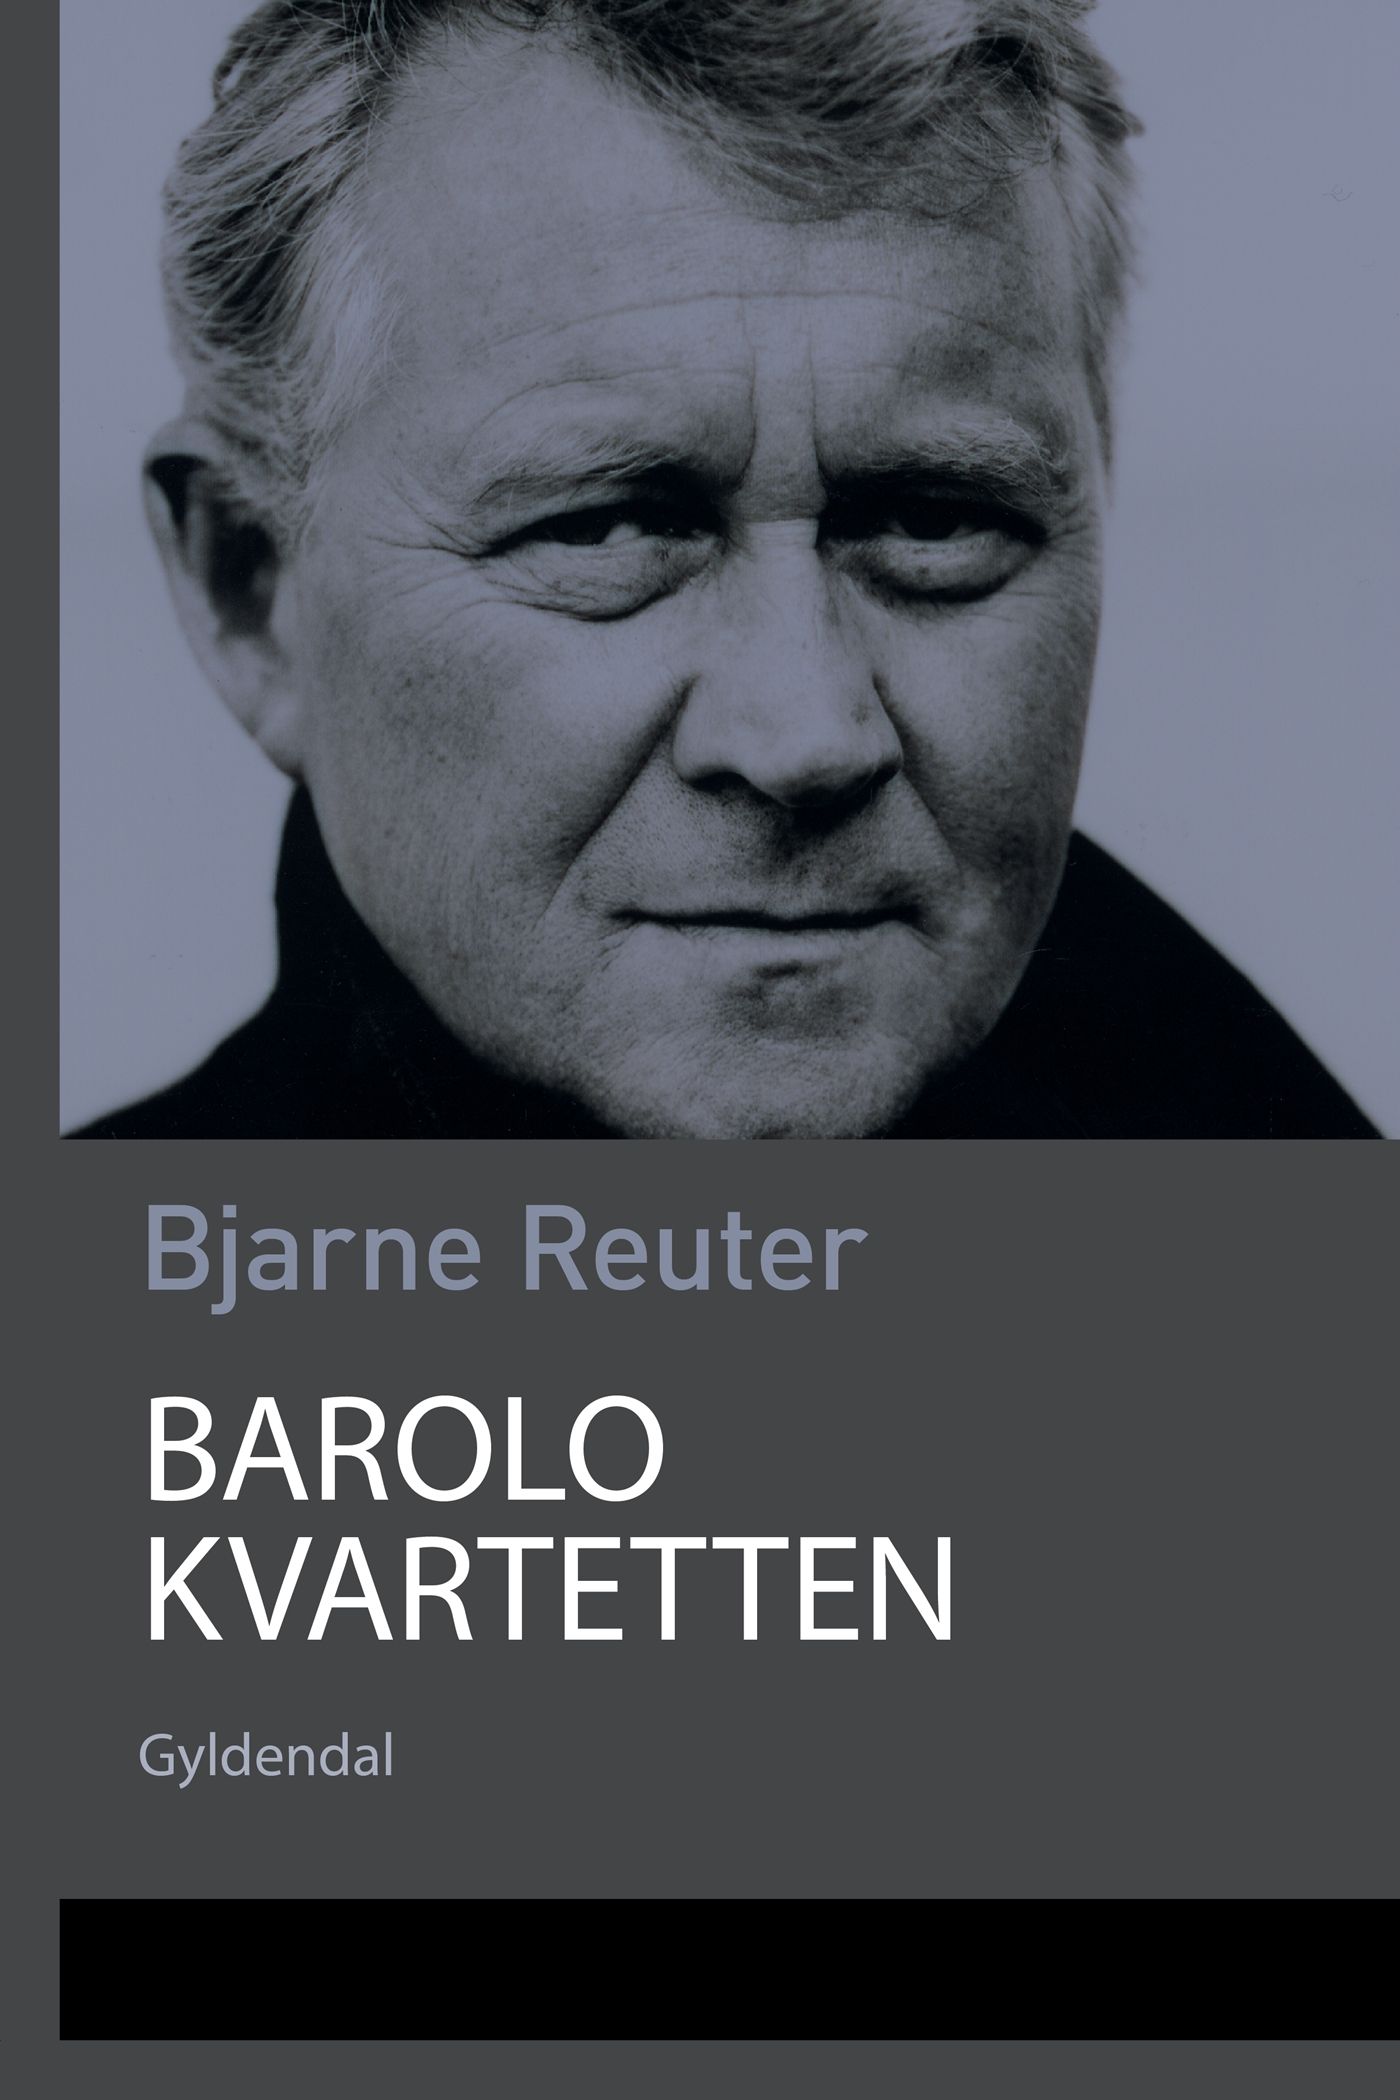 Barolo Kvartetten, eBook by Bjarne Reuter